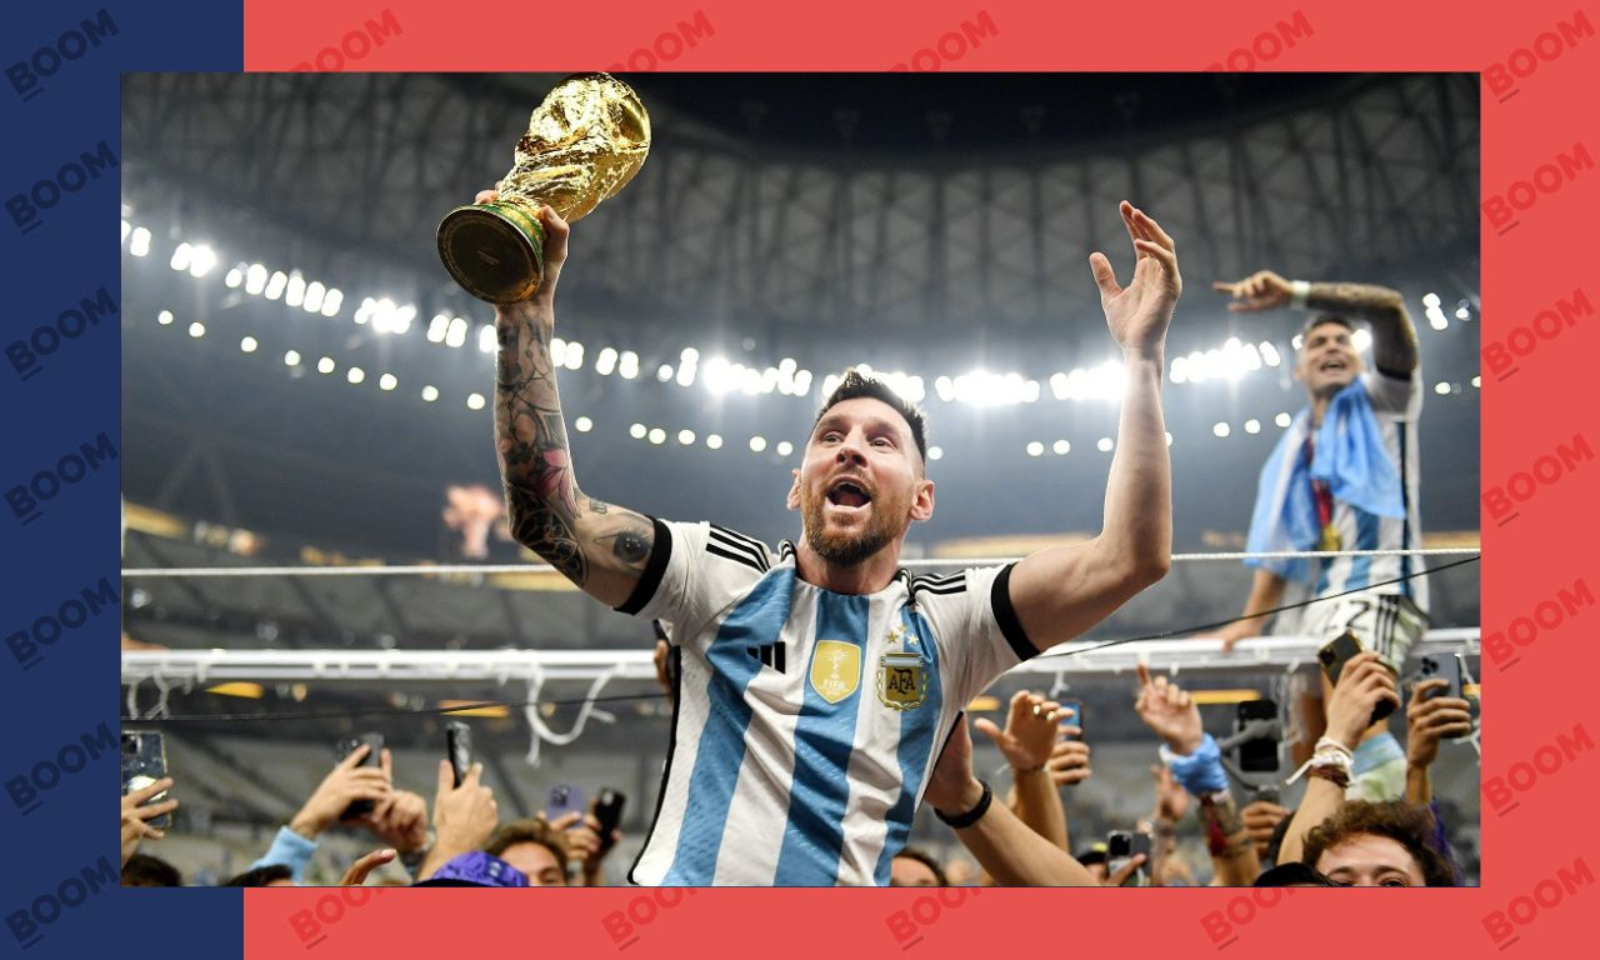 Mens/Youths 2022 Soccer World Cup Argentina Fans Jerseys Football